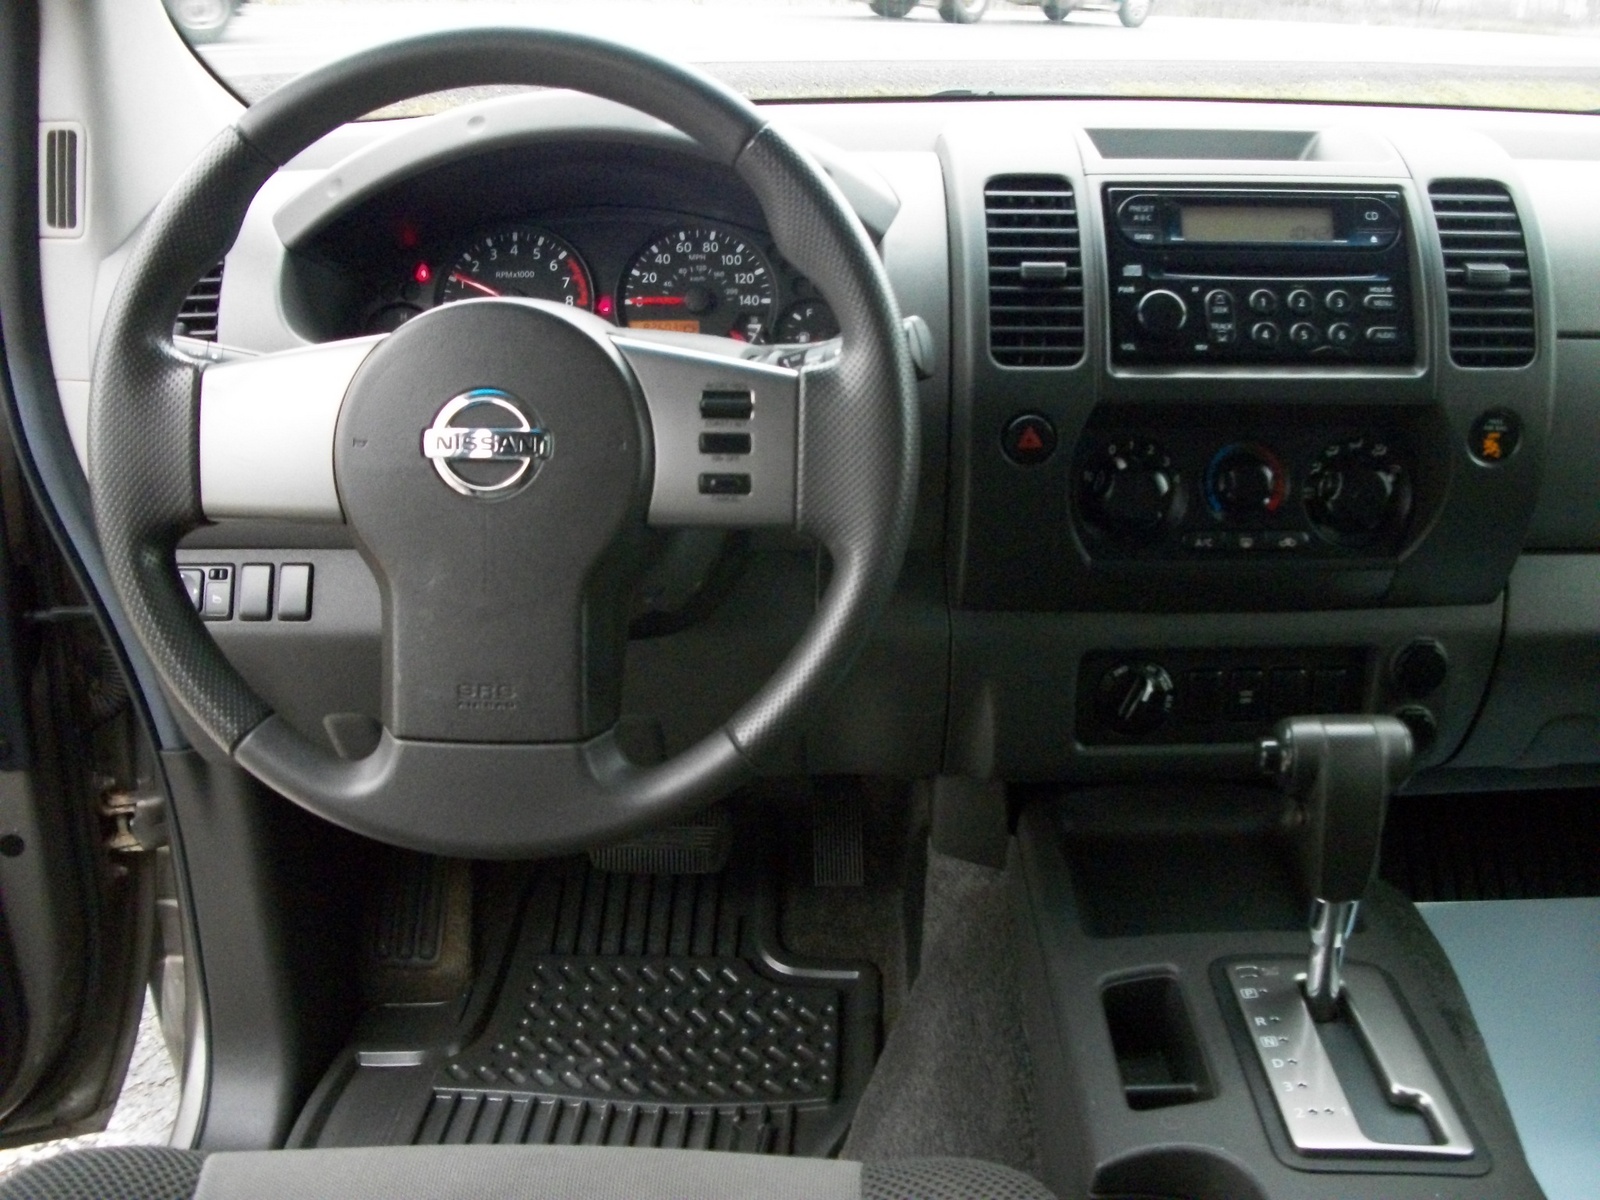 2005 Nissan xterra interior dimensions #1